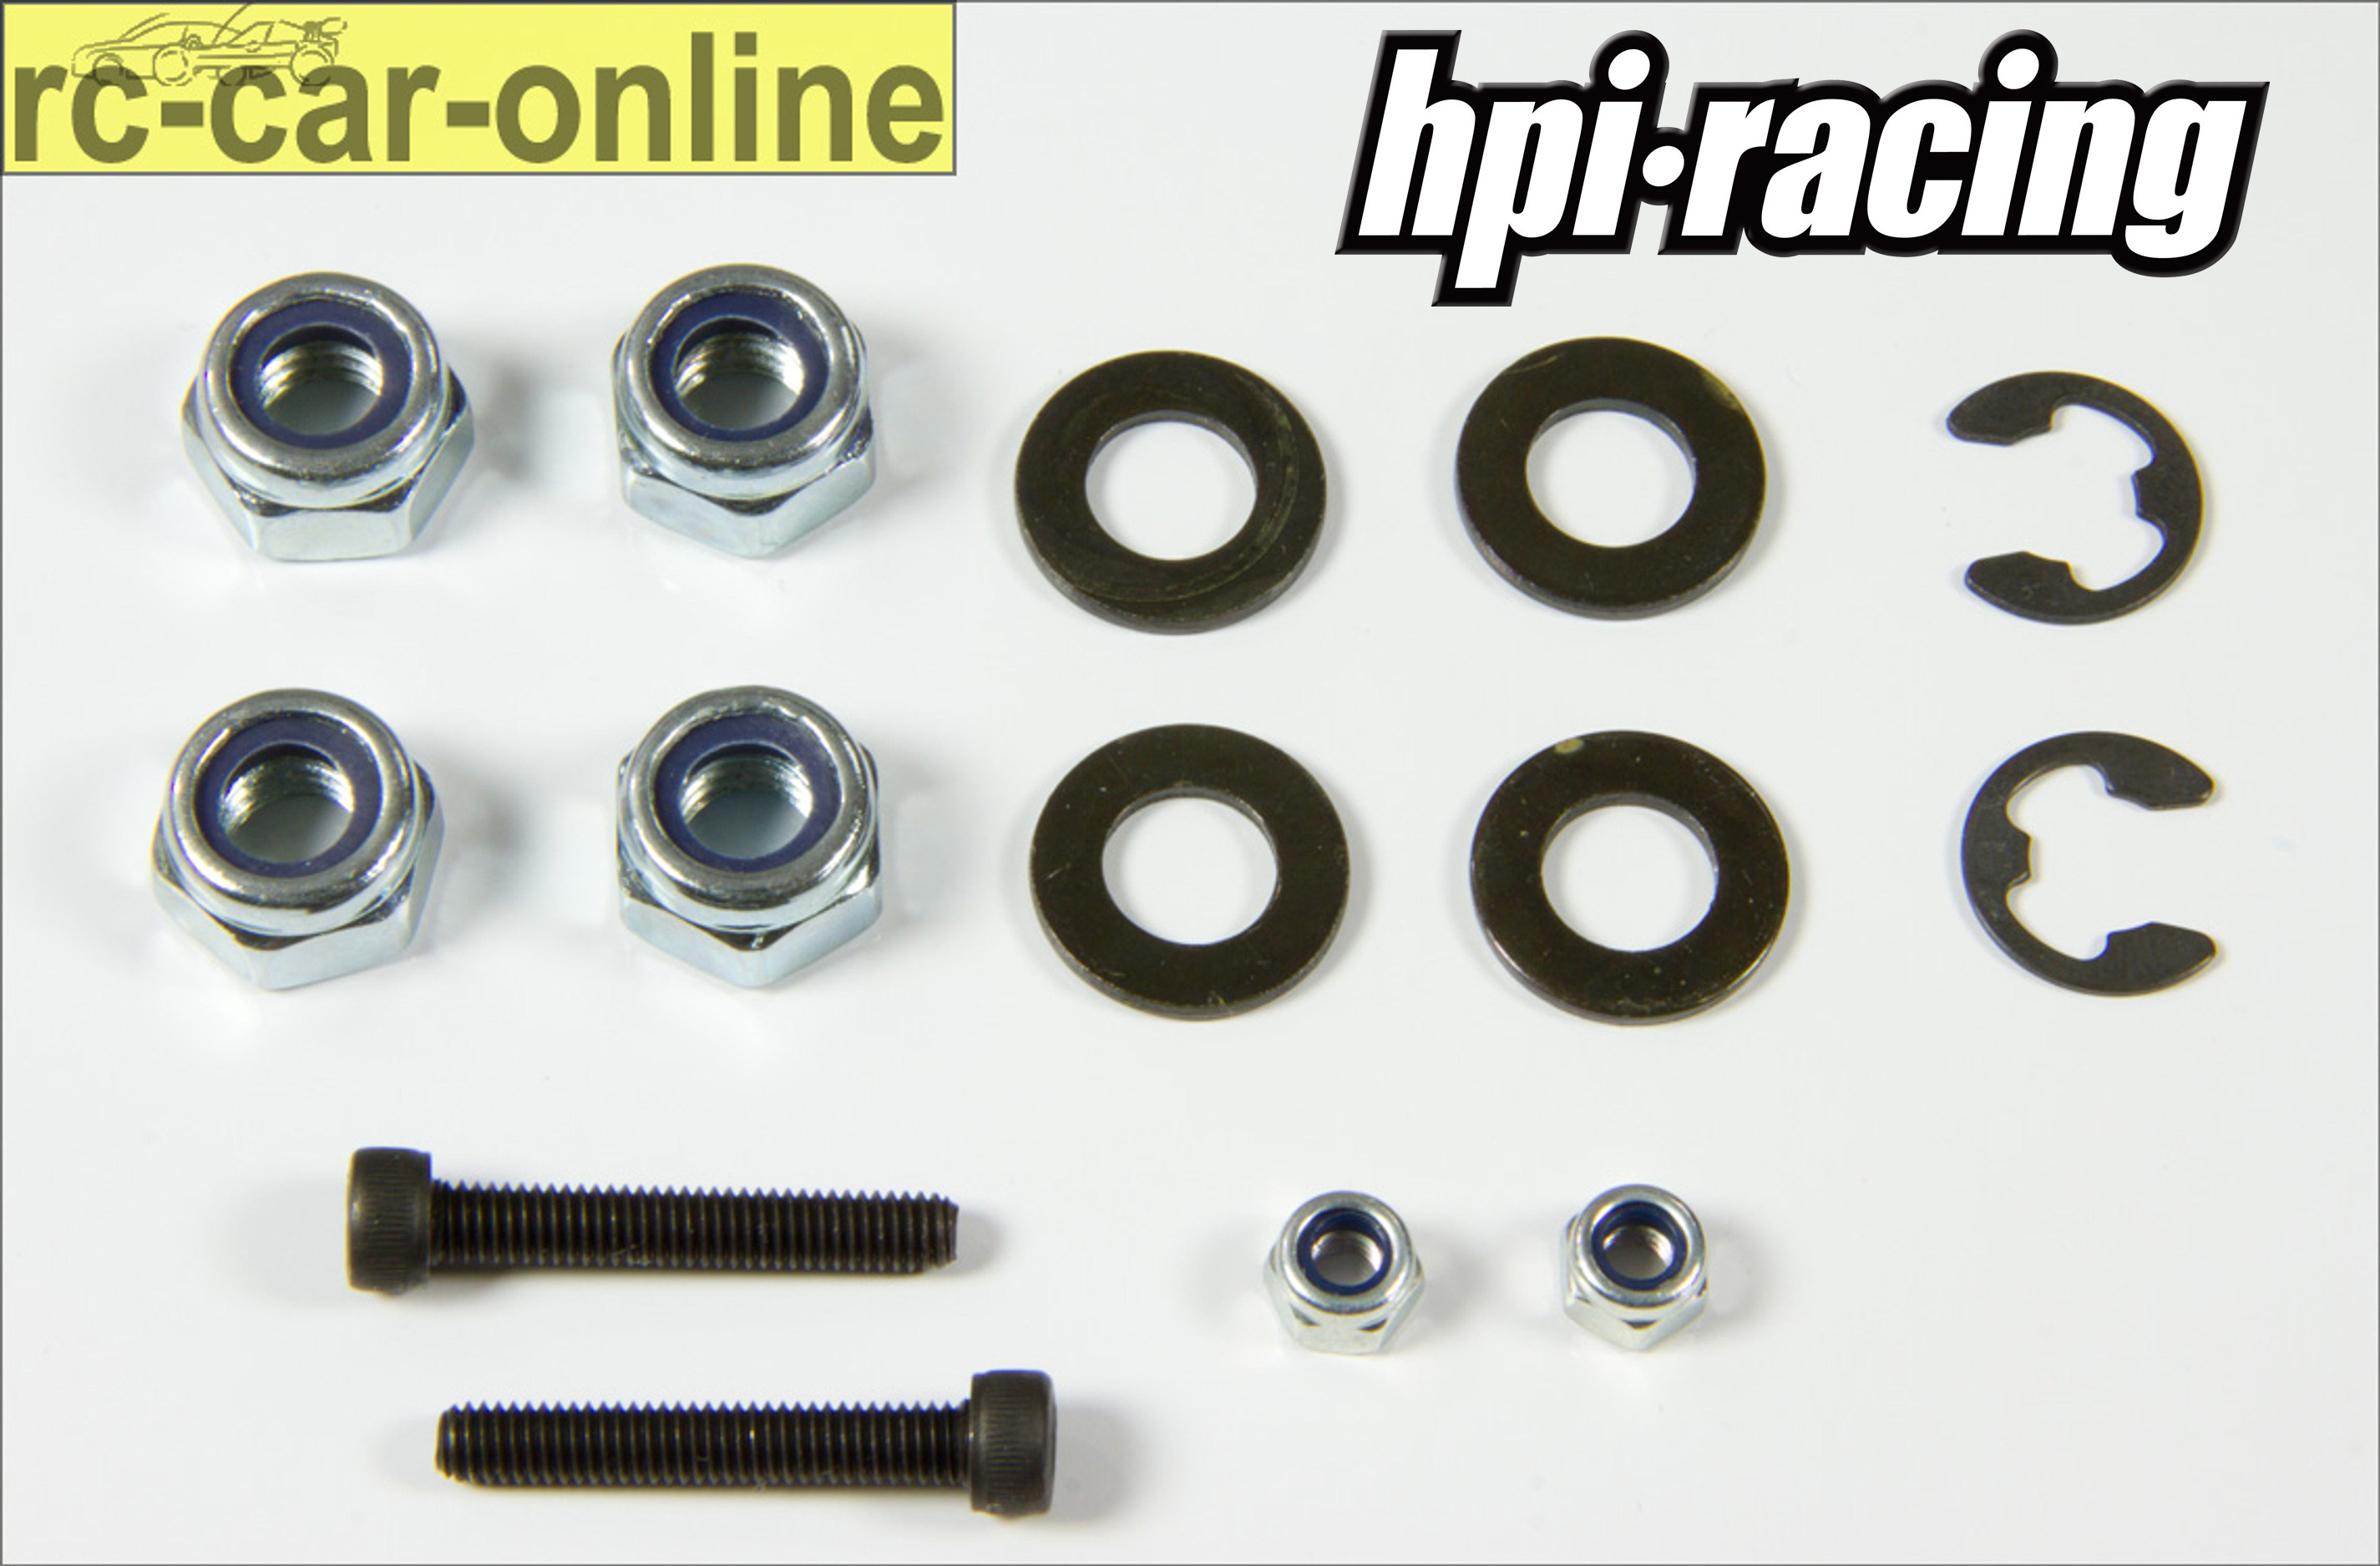 y1183/04 Hardware set for wheel adapter FG rim to HPI car